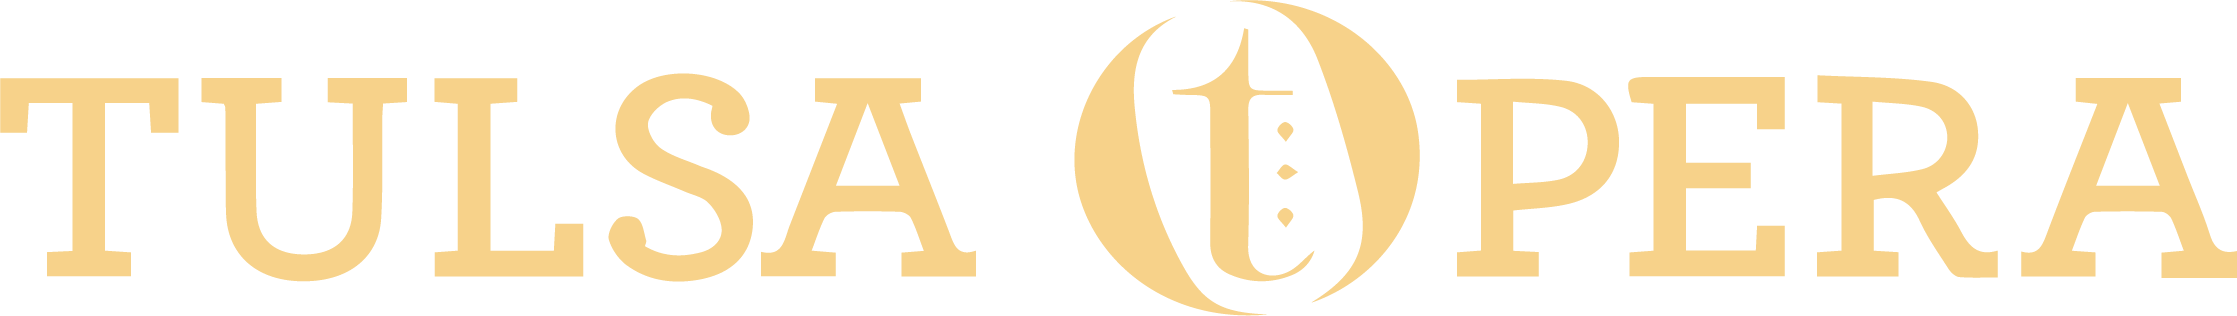 Tulsa Opera Logo - Gold